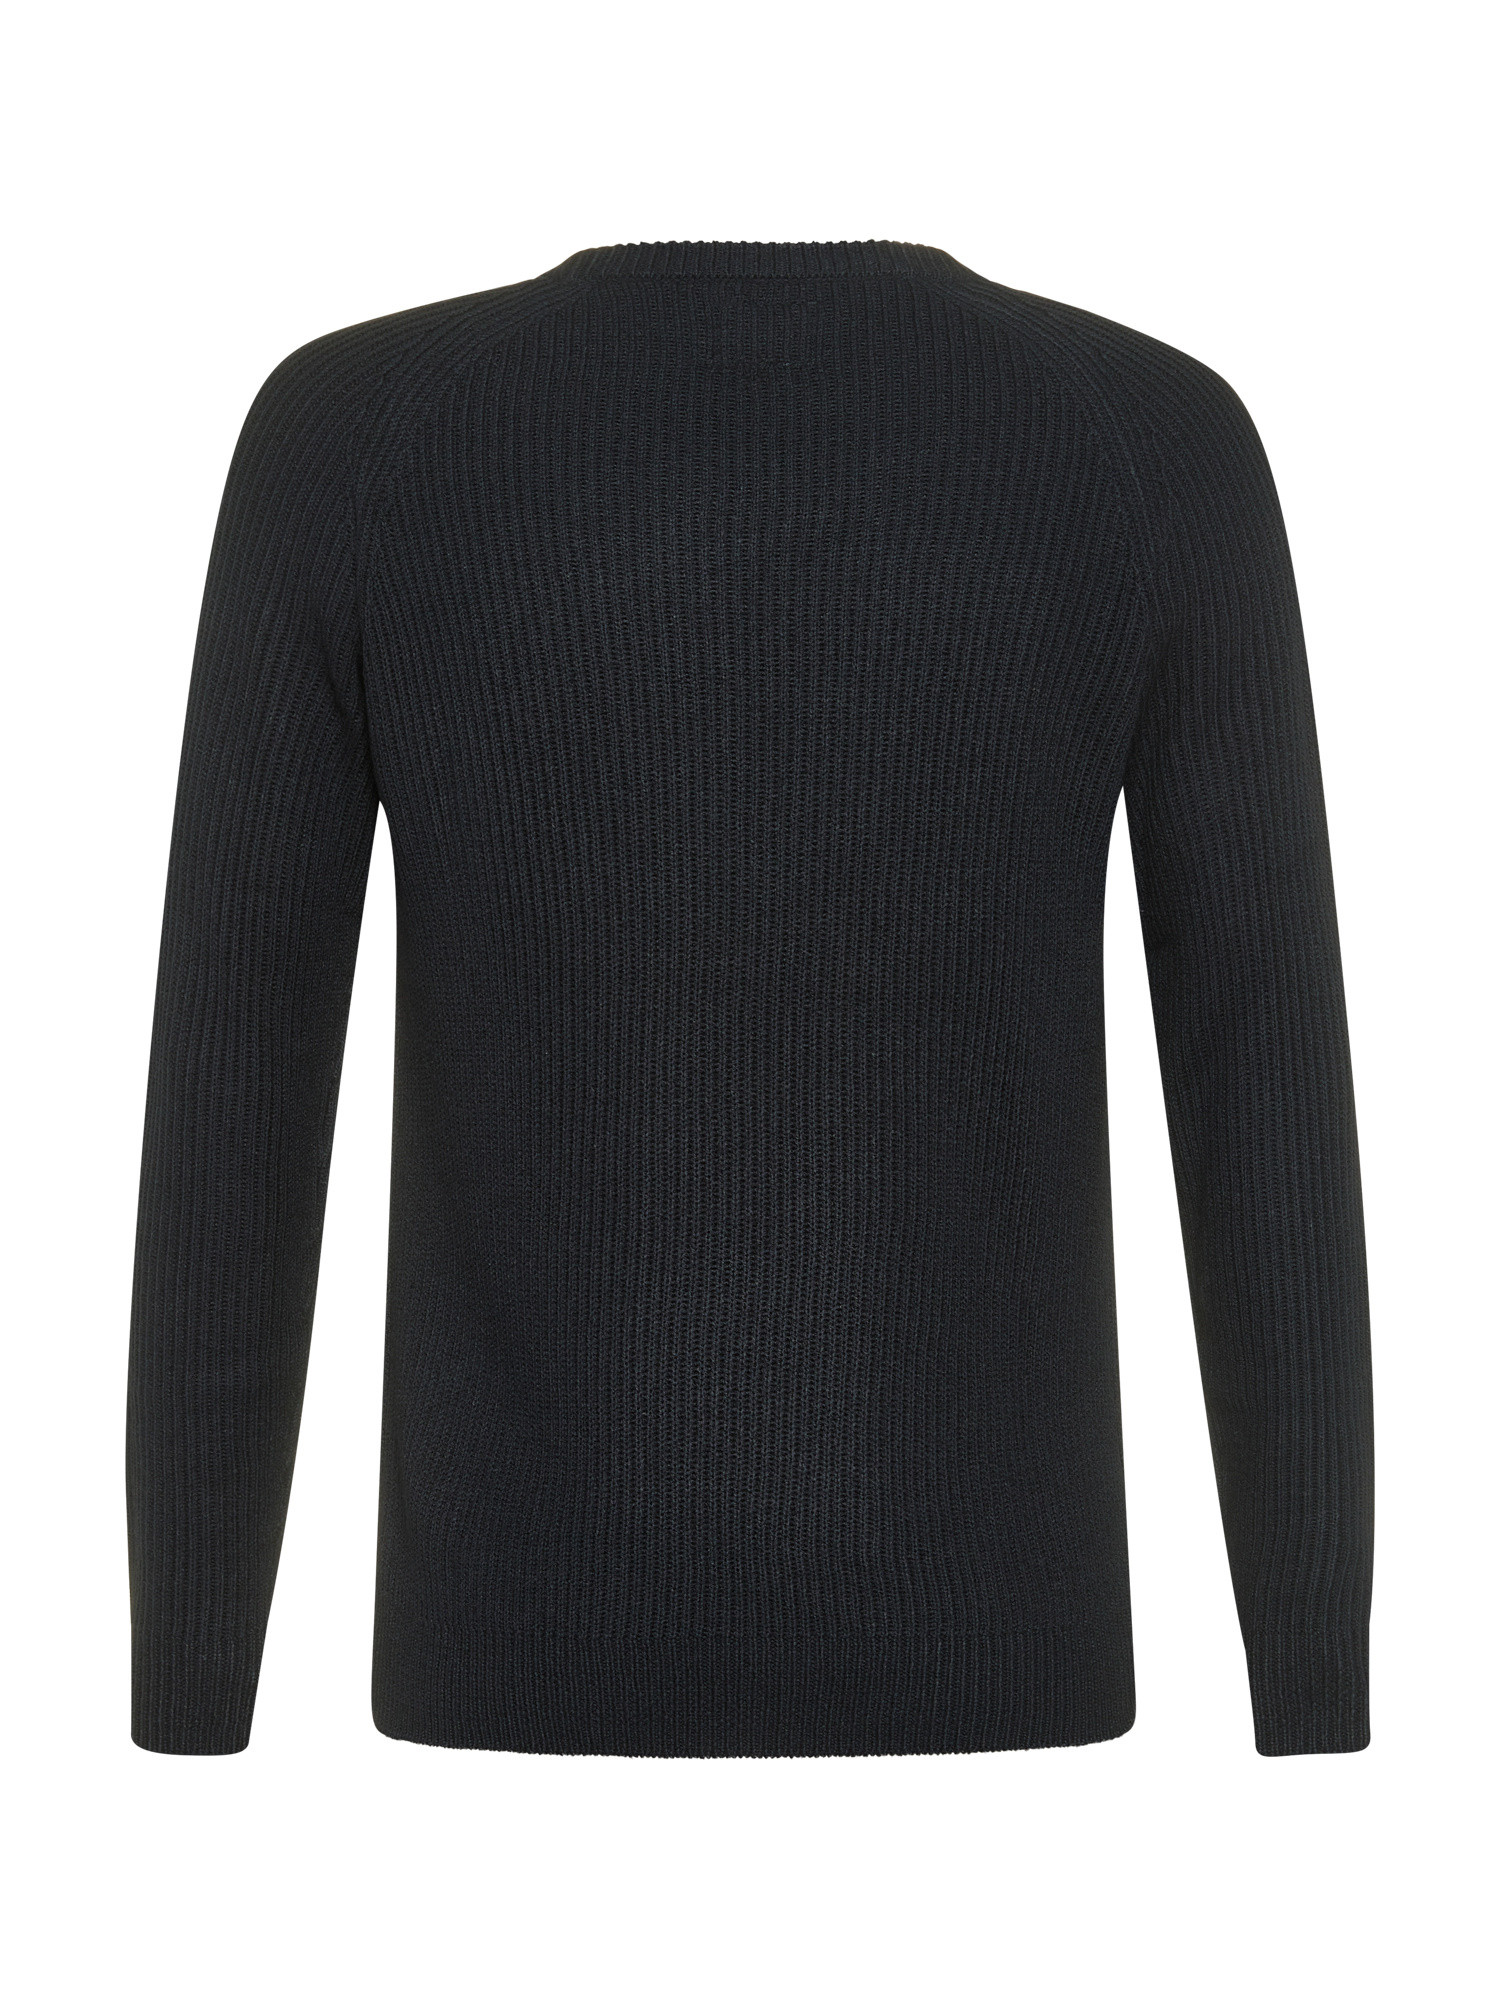 Jack & Jones Ribbed Knitted Sweater, Dark Blue, large image number 1